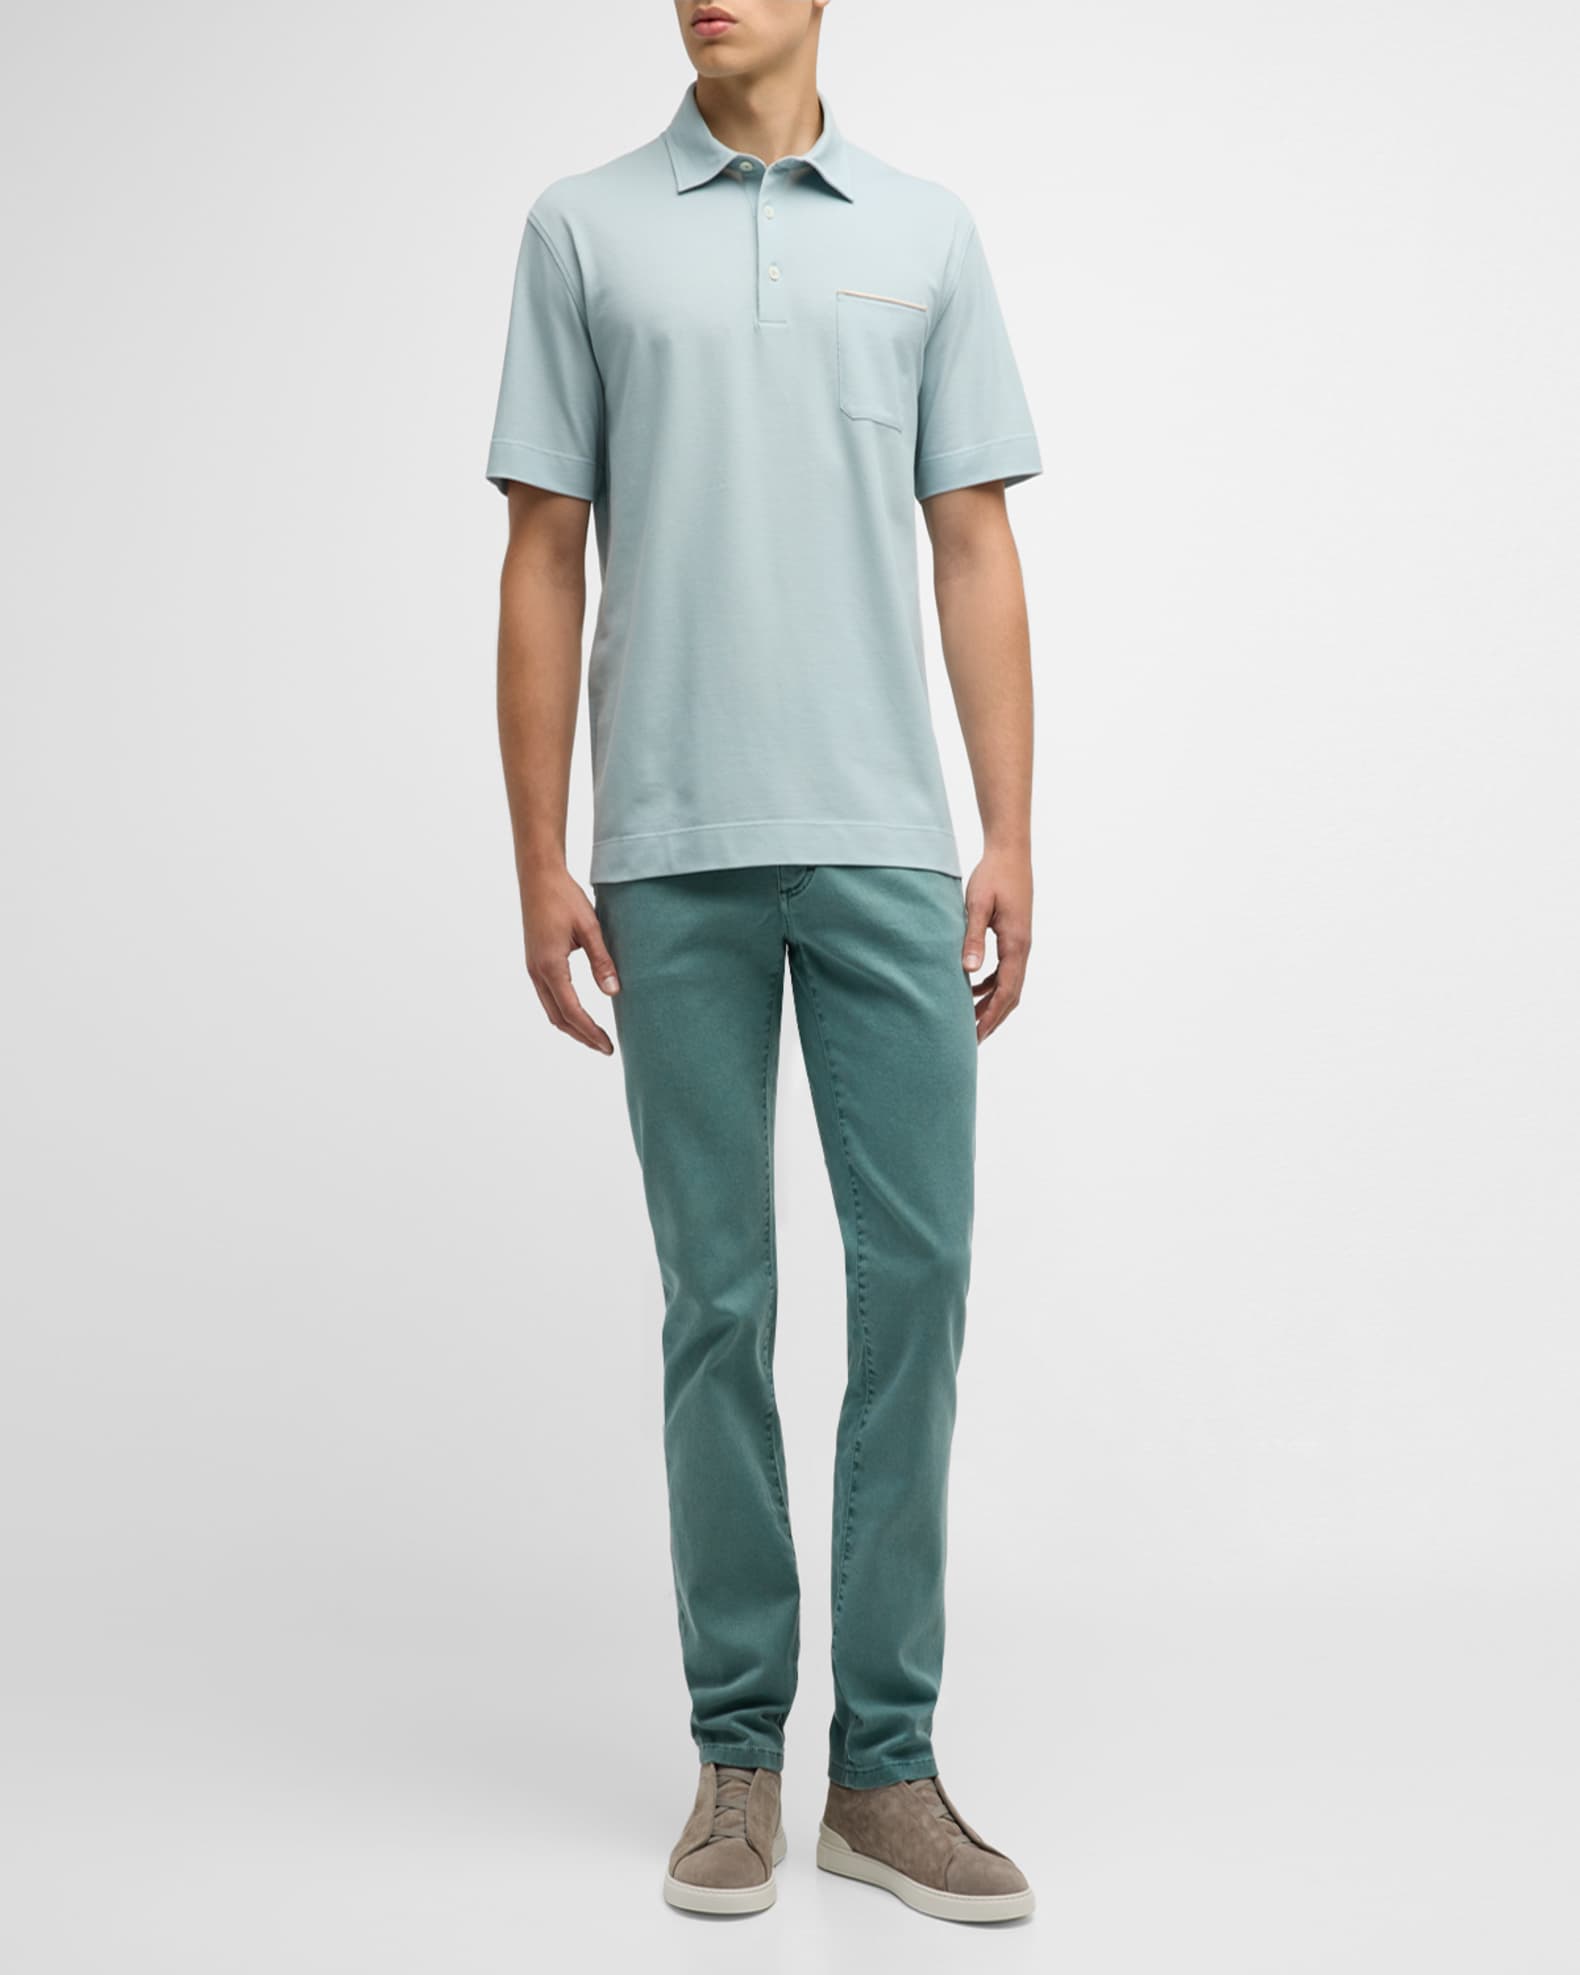 ZEGNA Men's Pocket Polo Shirt | Neiman Marcus